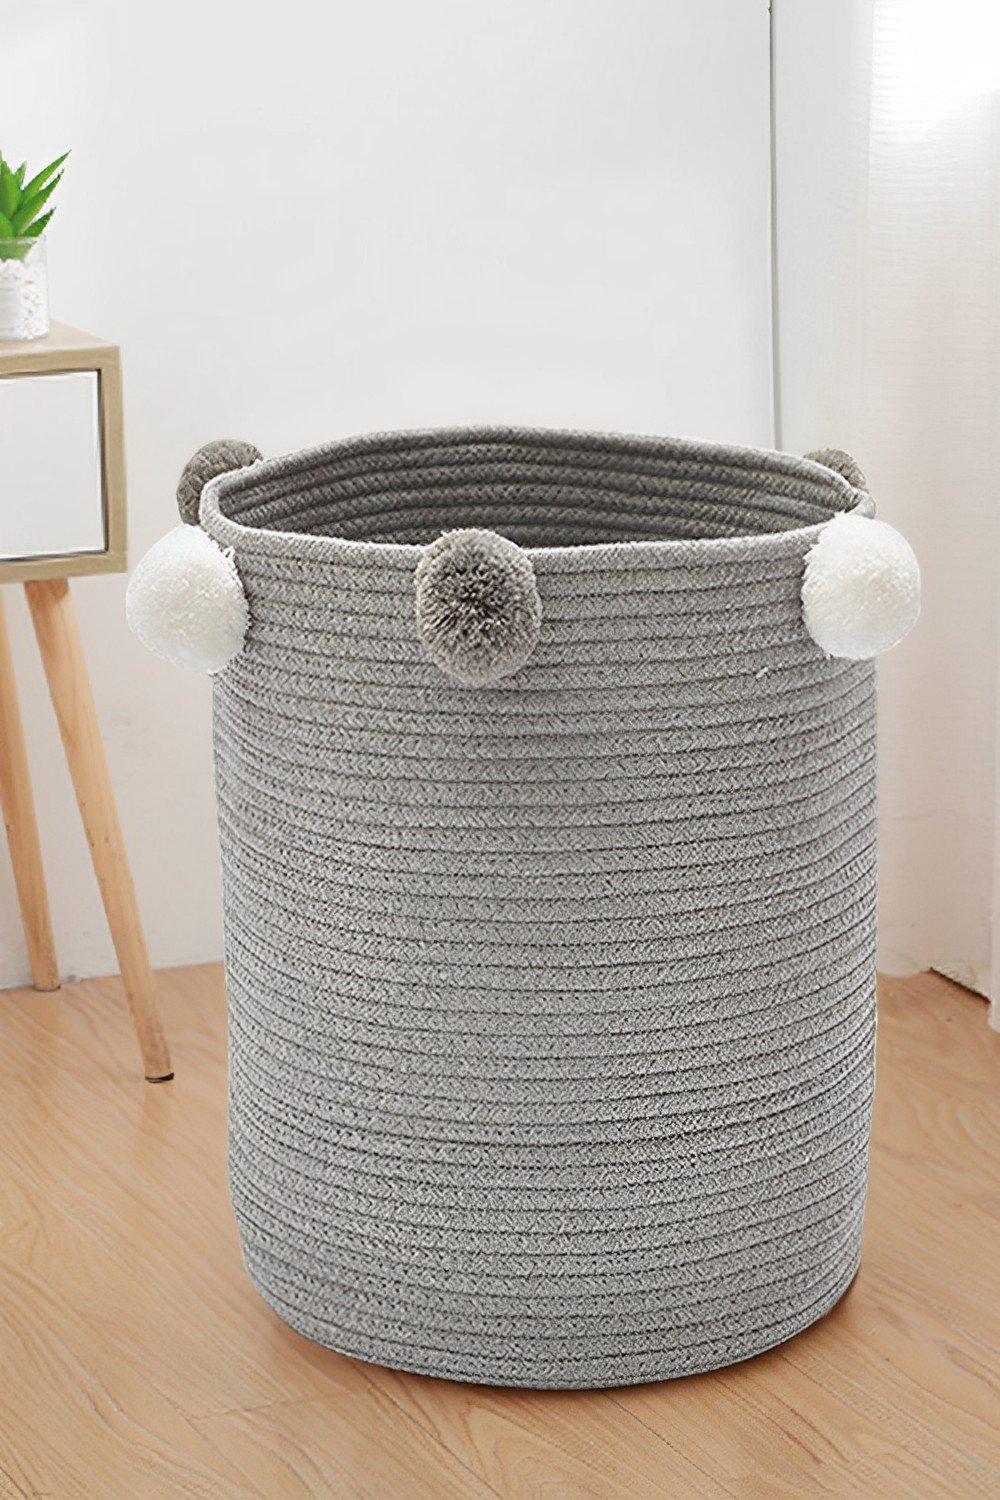 Cotton Rope Hamper Basket Woven Laundry Toy Basket Storage Organizer